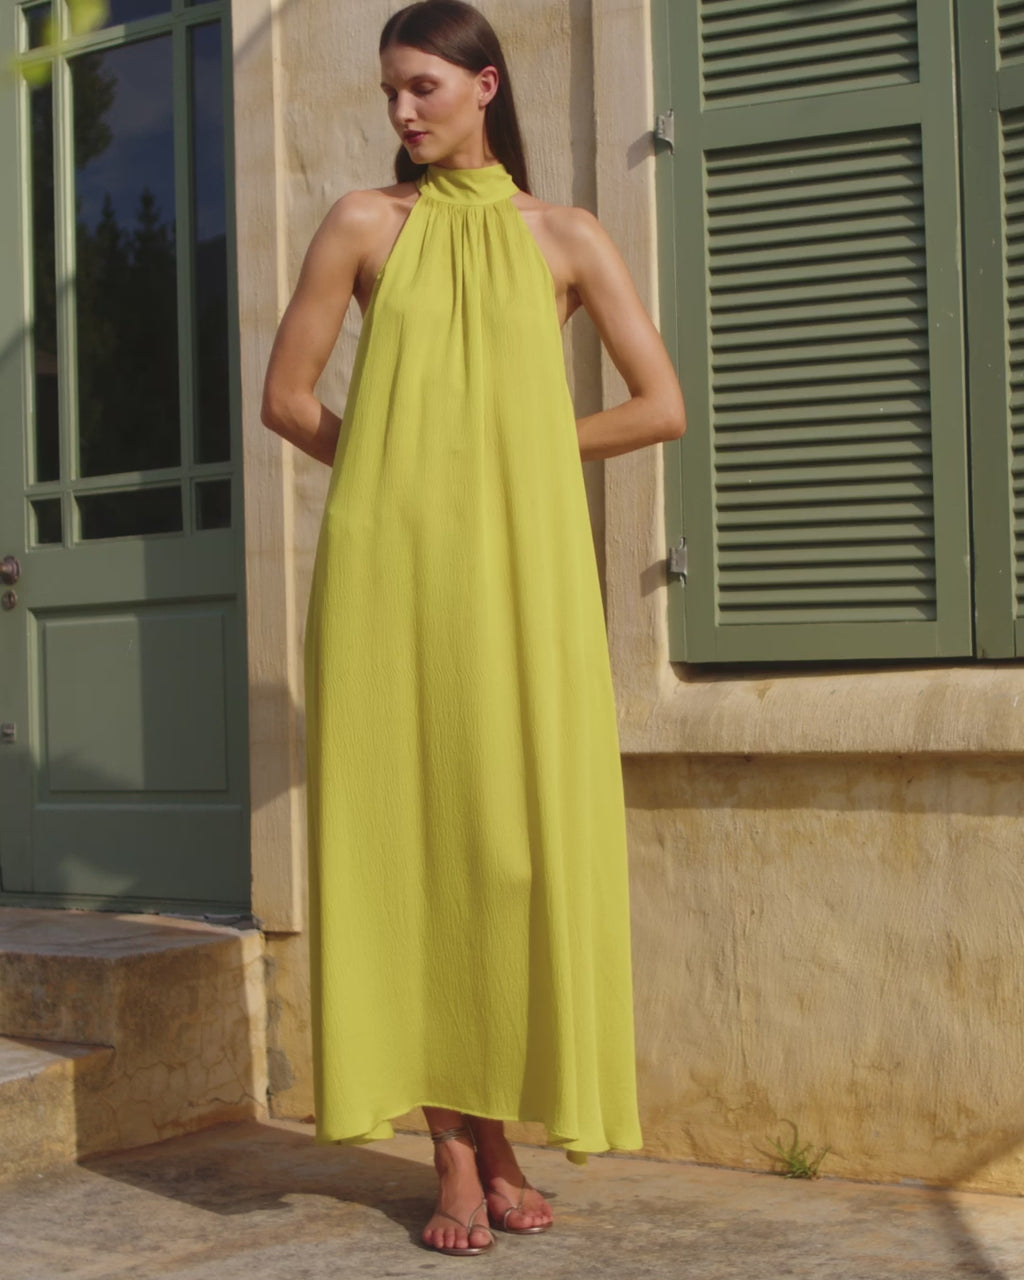 Wiggy Kit | The Aster Dress | Video of model wearing yellow maxi dress